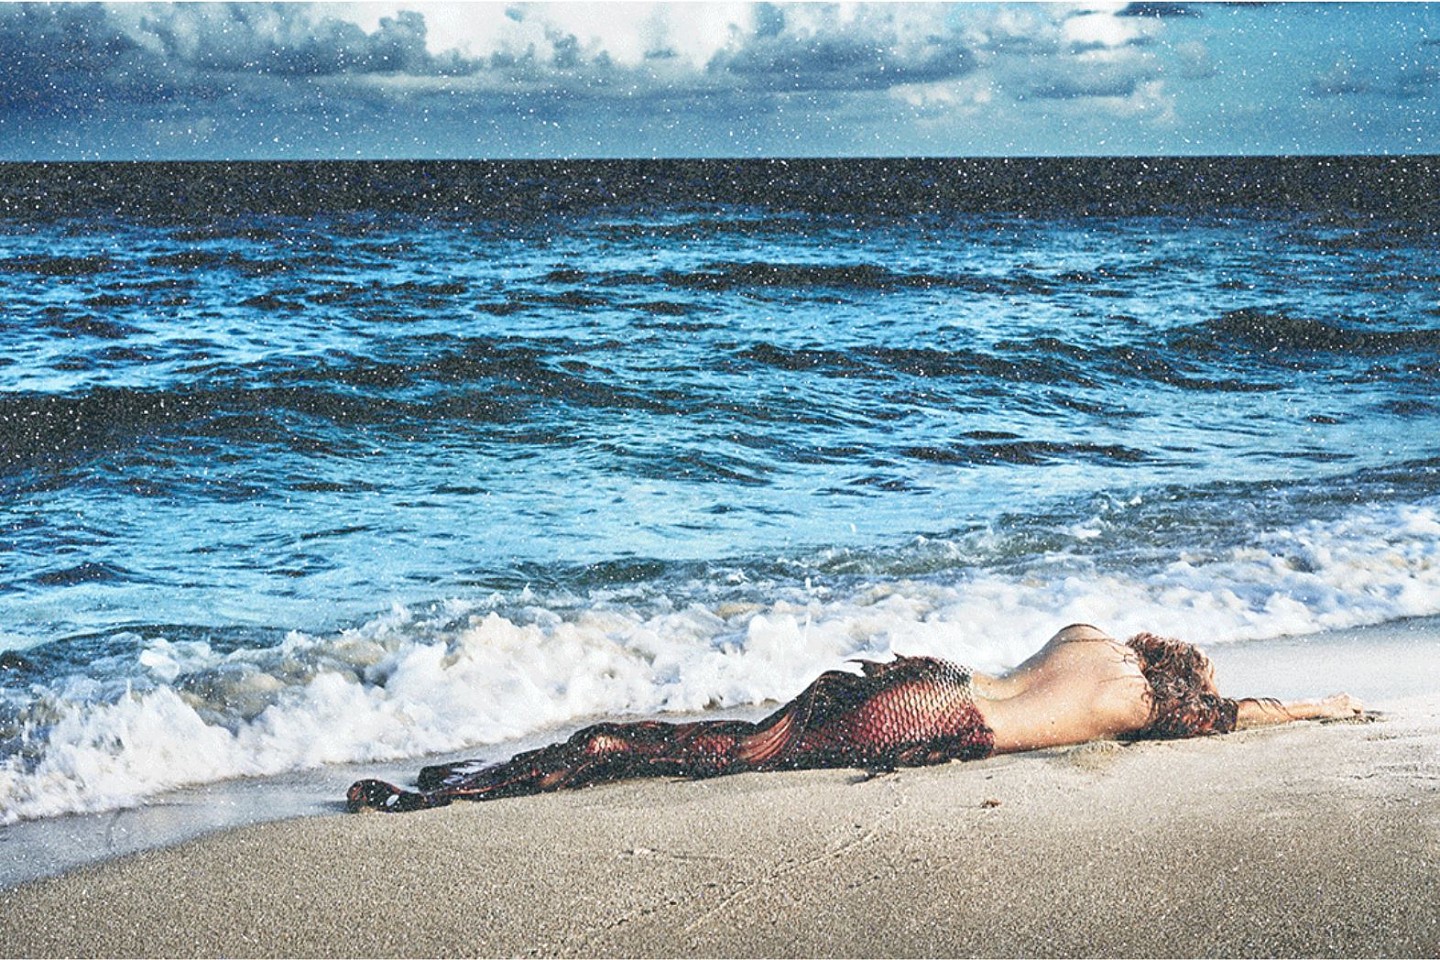 David Drebin, Mermaid In Paradise, 2021
Digital C Print with Diamond Dust, 39 x 59 in.